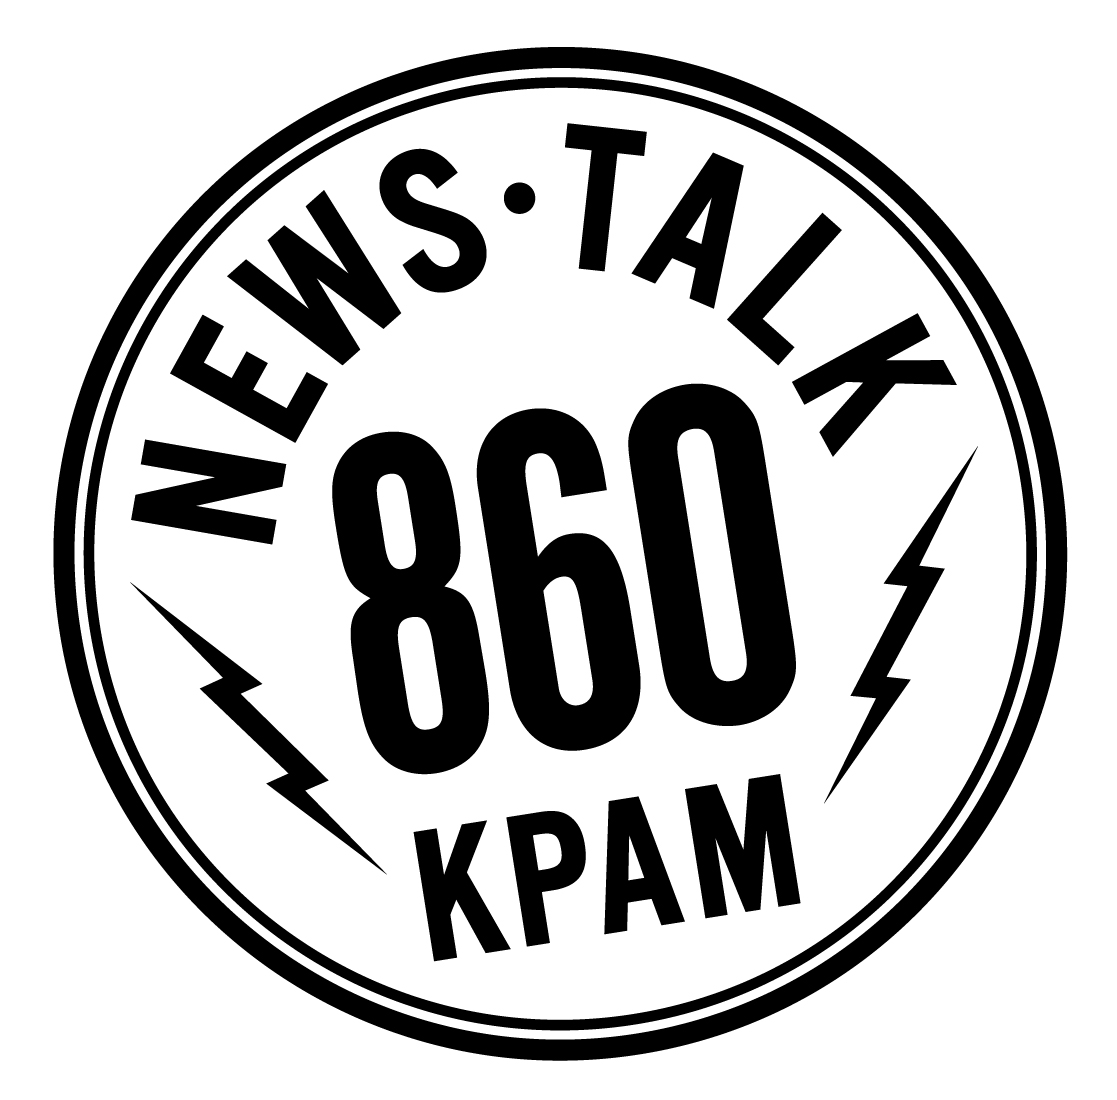 KPAM radio